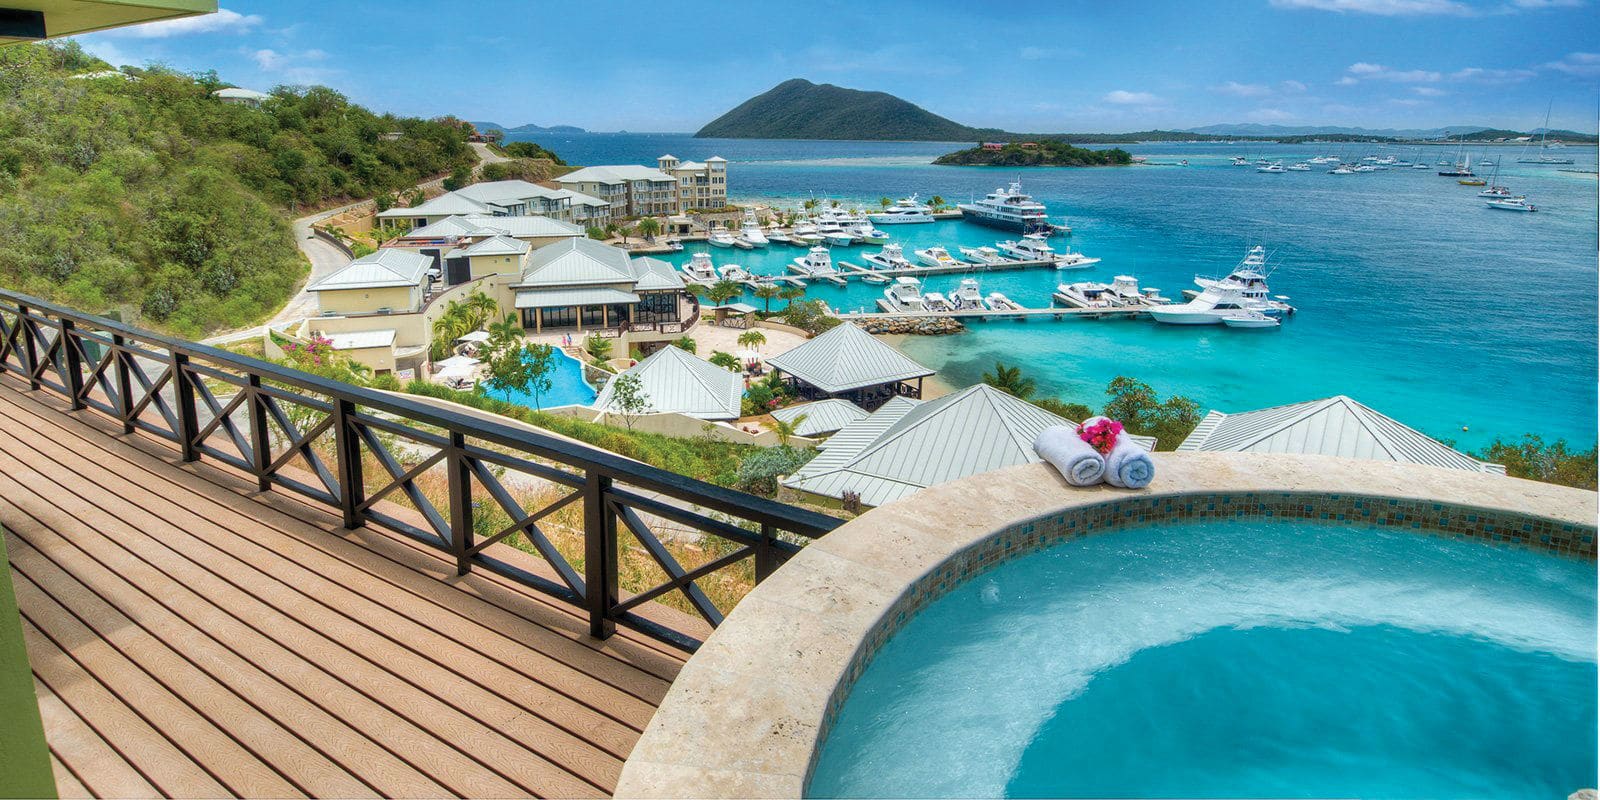 Black Friday Cyber Monday Travel Deals: Scrub Island Resort & Spa